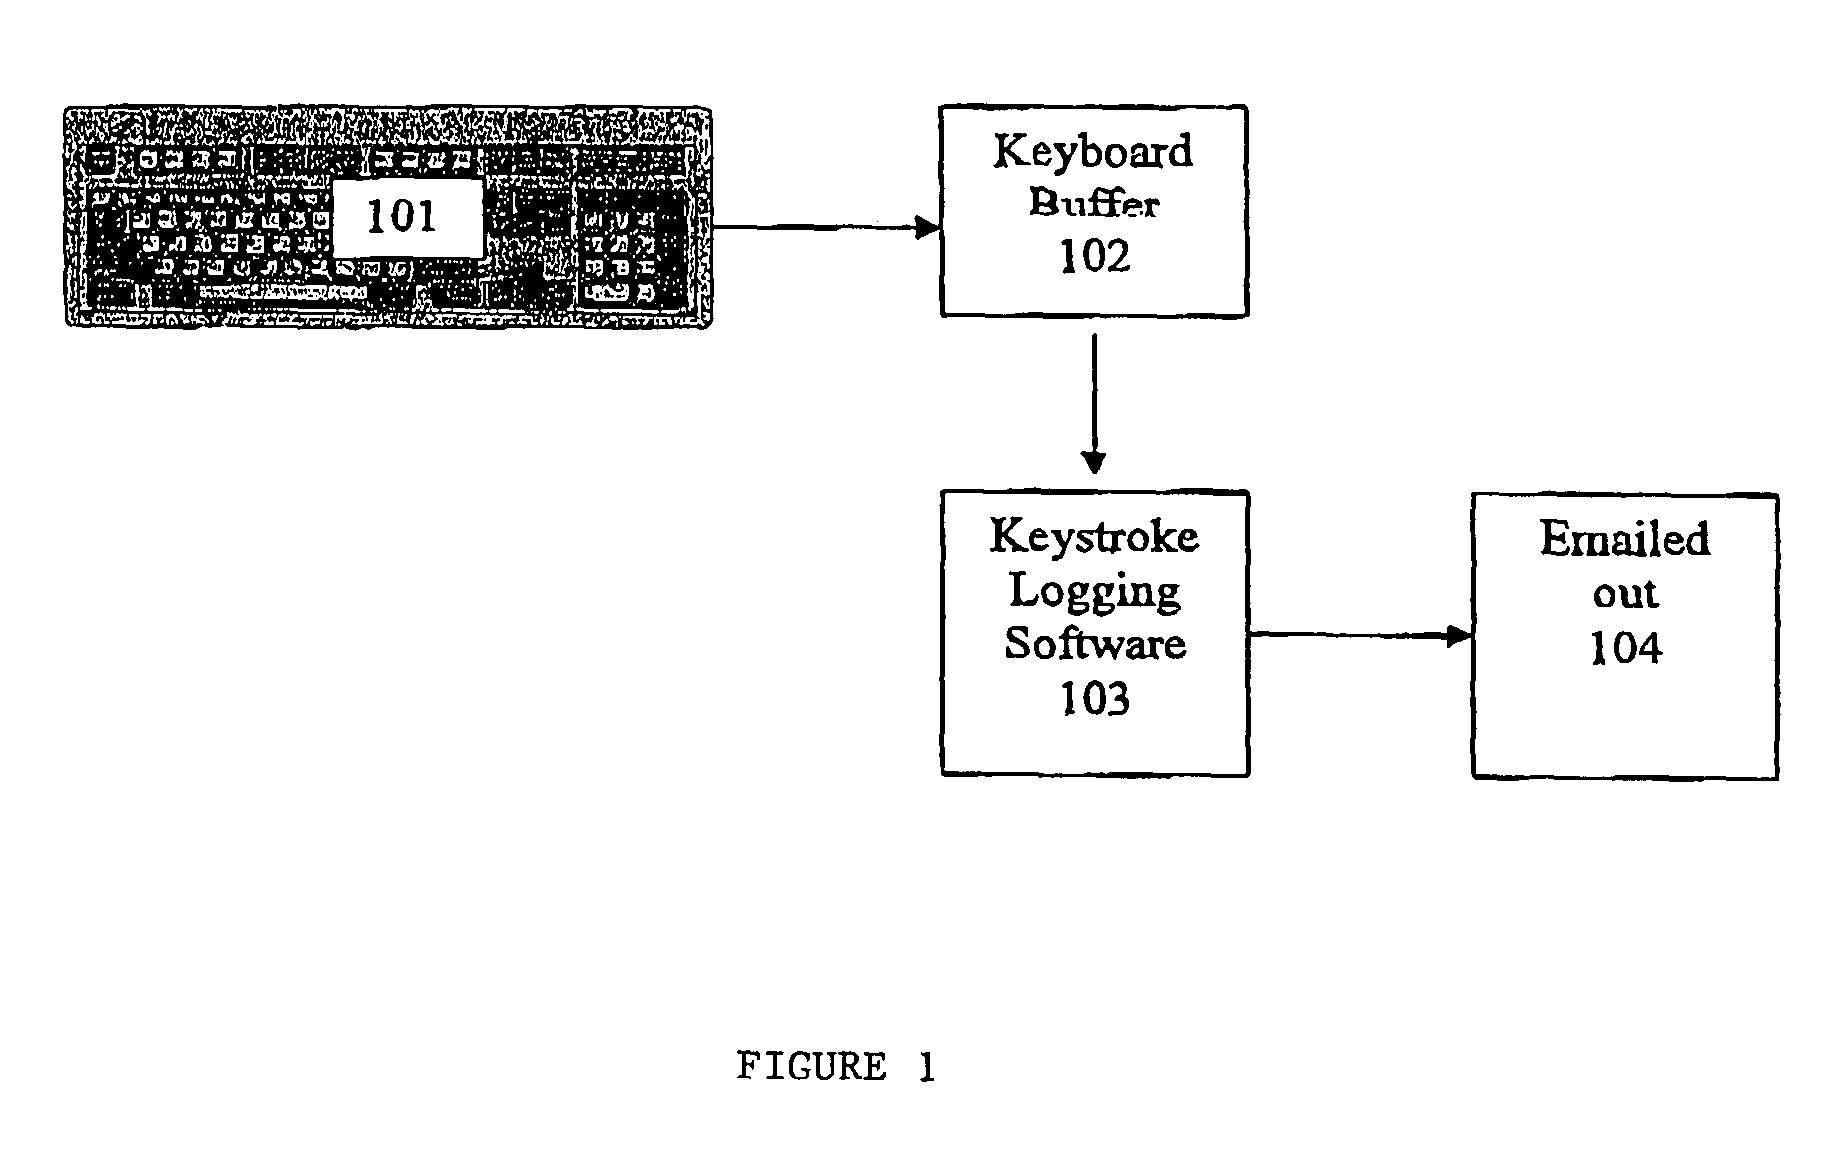 System for preventing keystroke logging software from accessing or identifying keystrokes